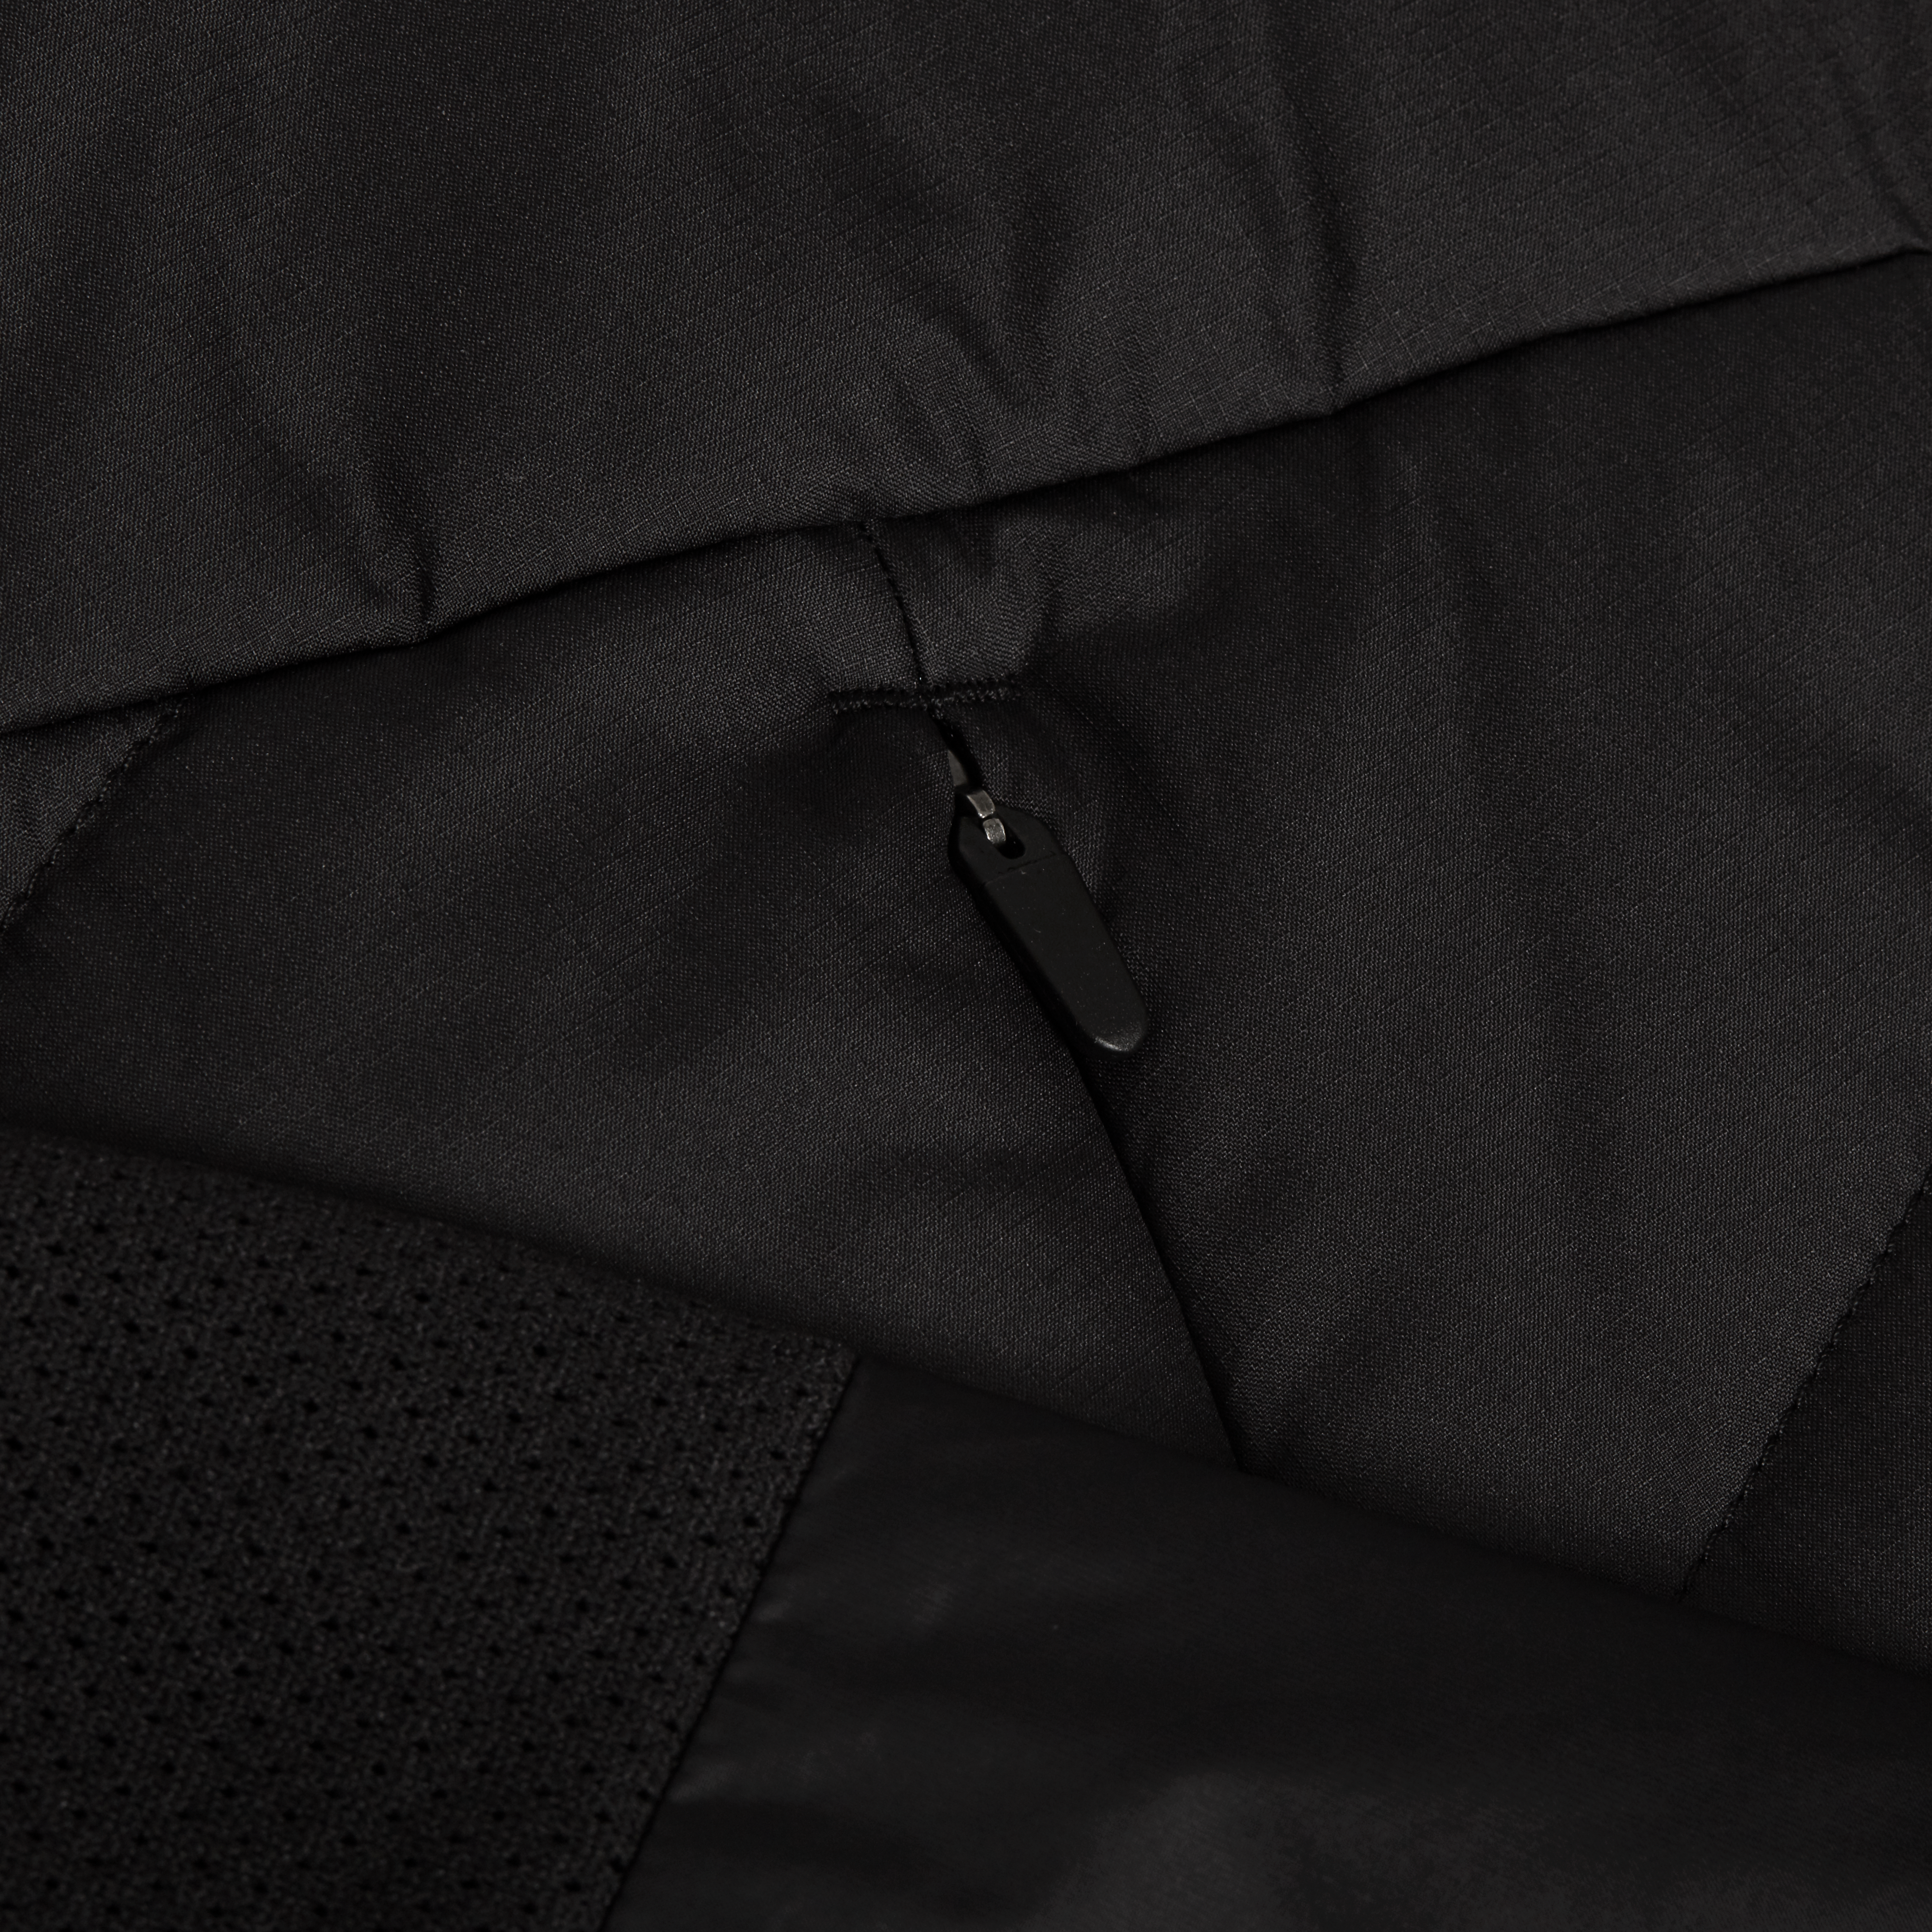 Trovat 3 in 1 HS Hooded Jacket Men product image